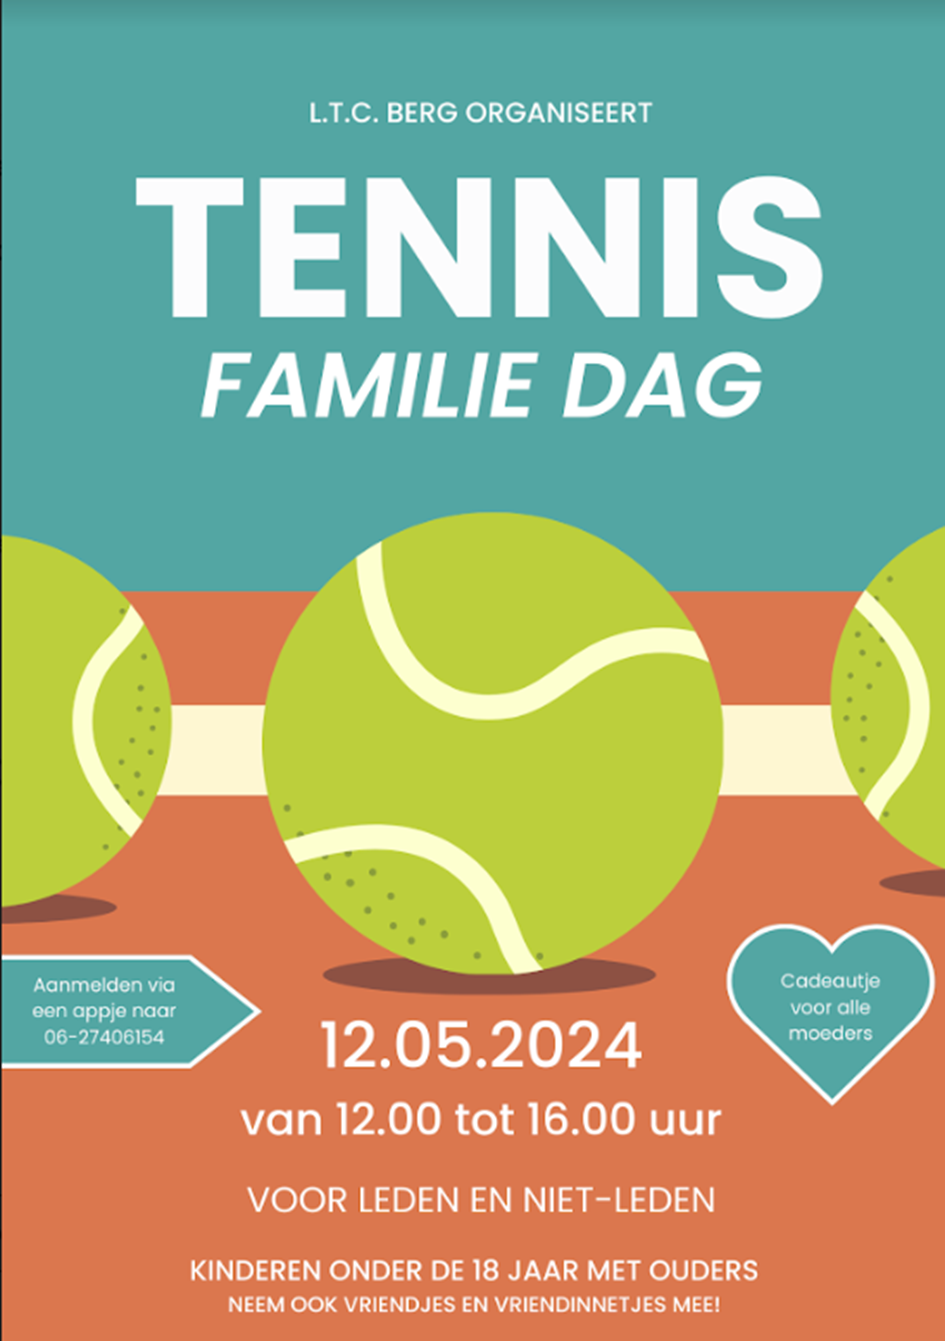 Tennis familiedag 12 mei.png